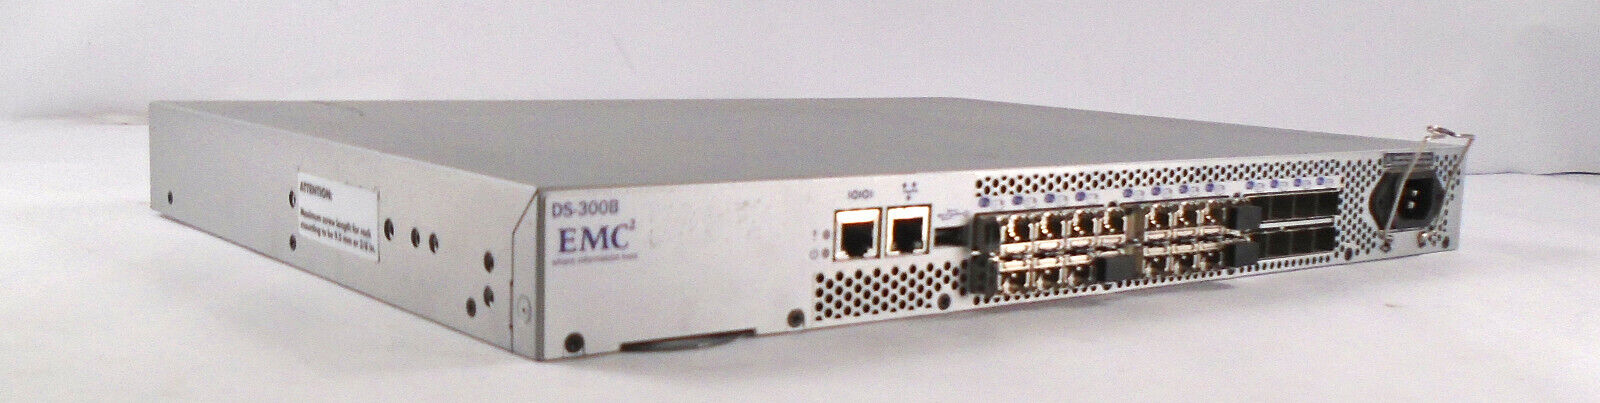 Brocade Emc2 Ds-300b 24 Port Network Switch